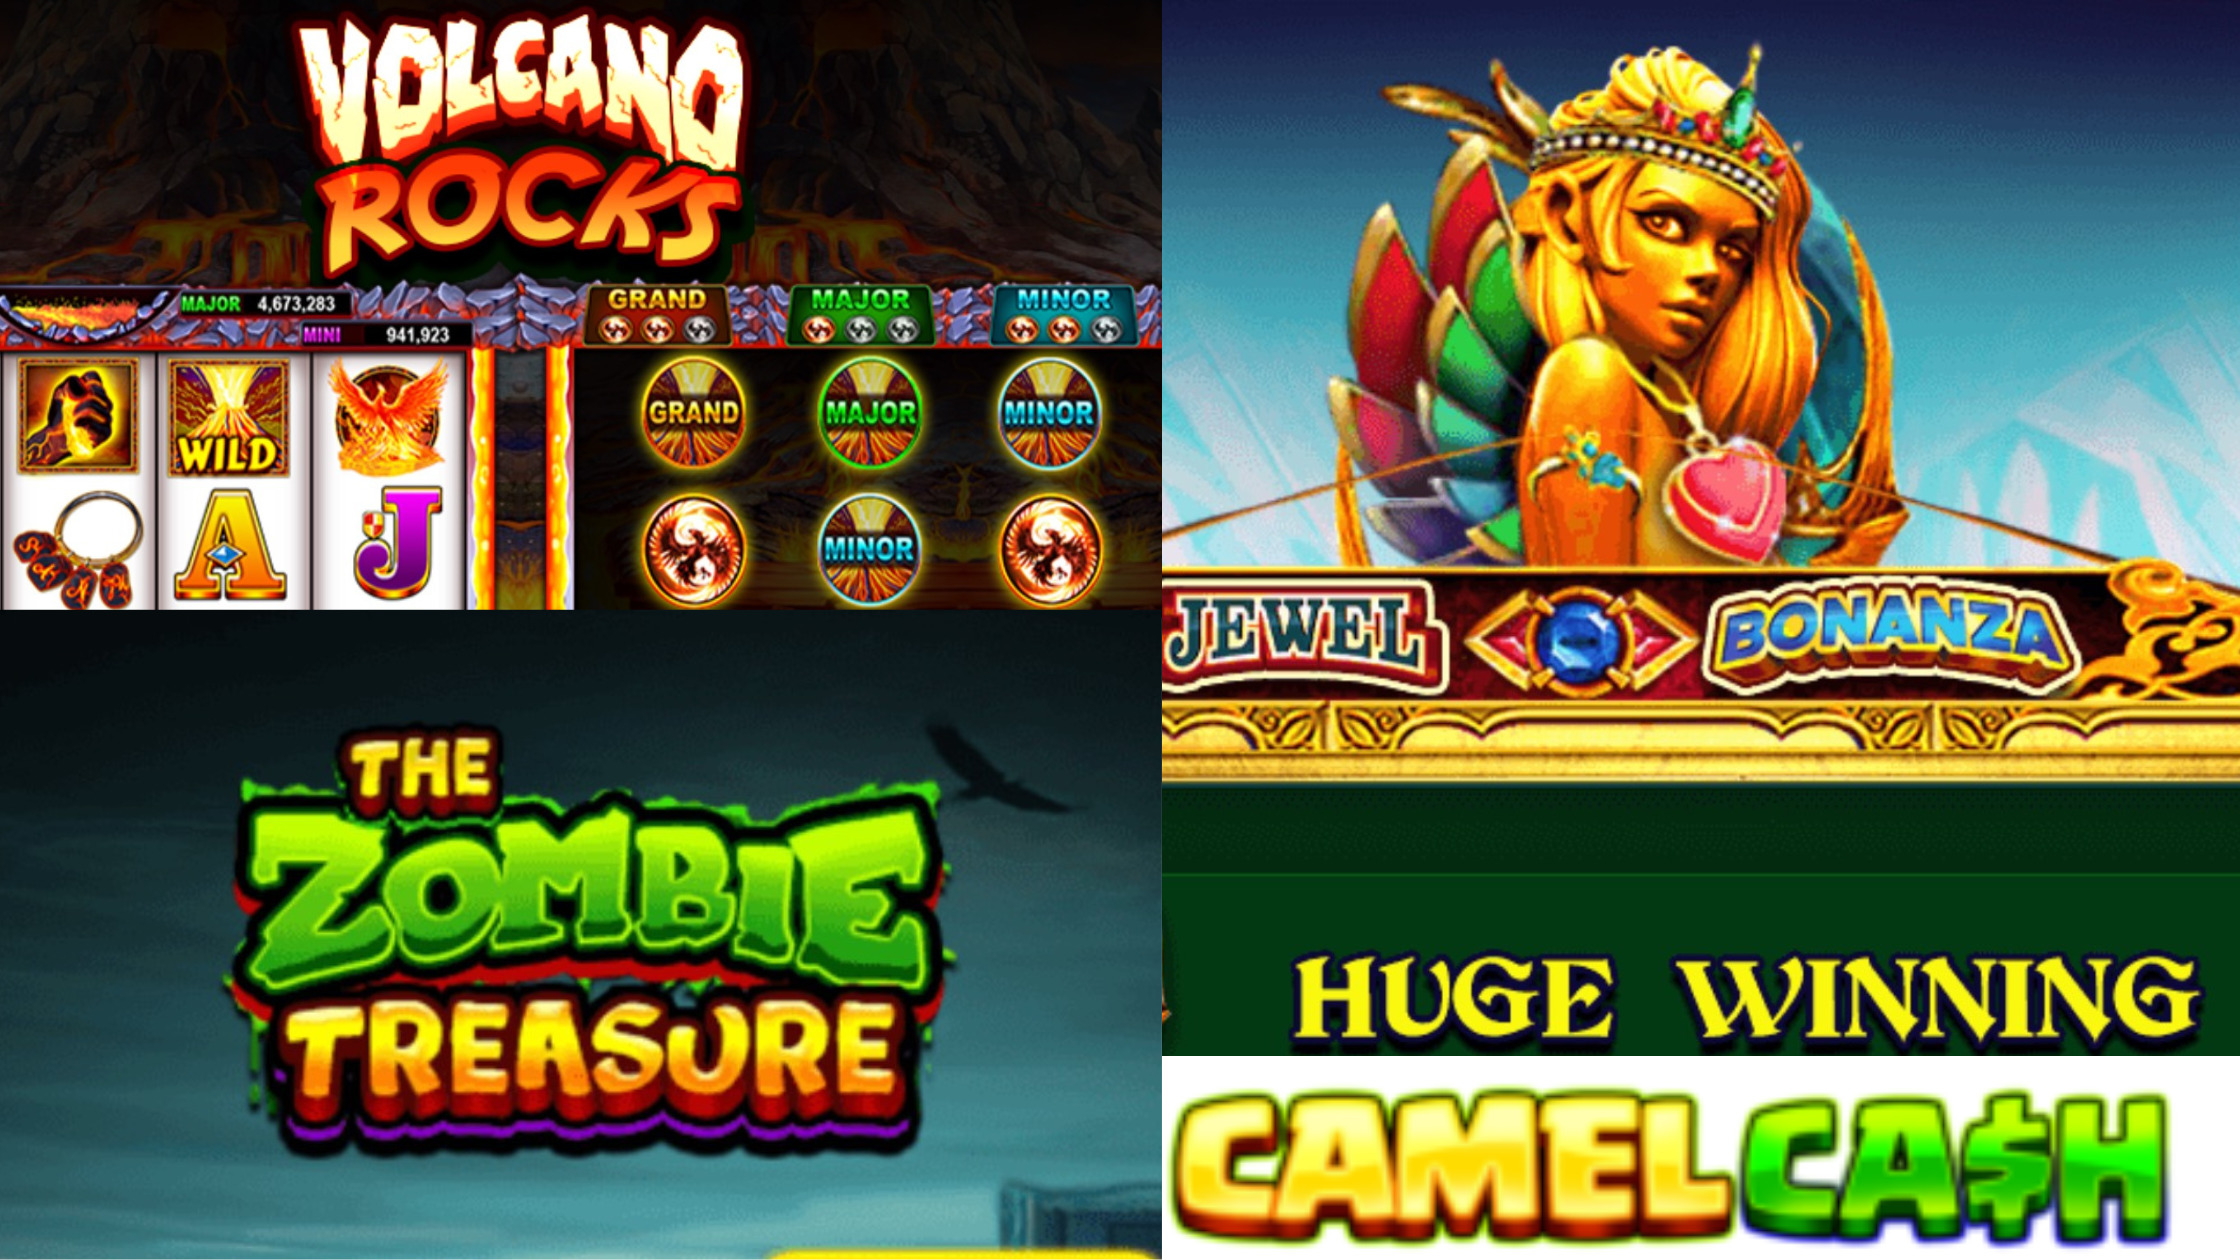 Camel Cash Casino Slot Machines